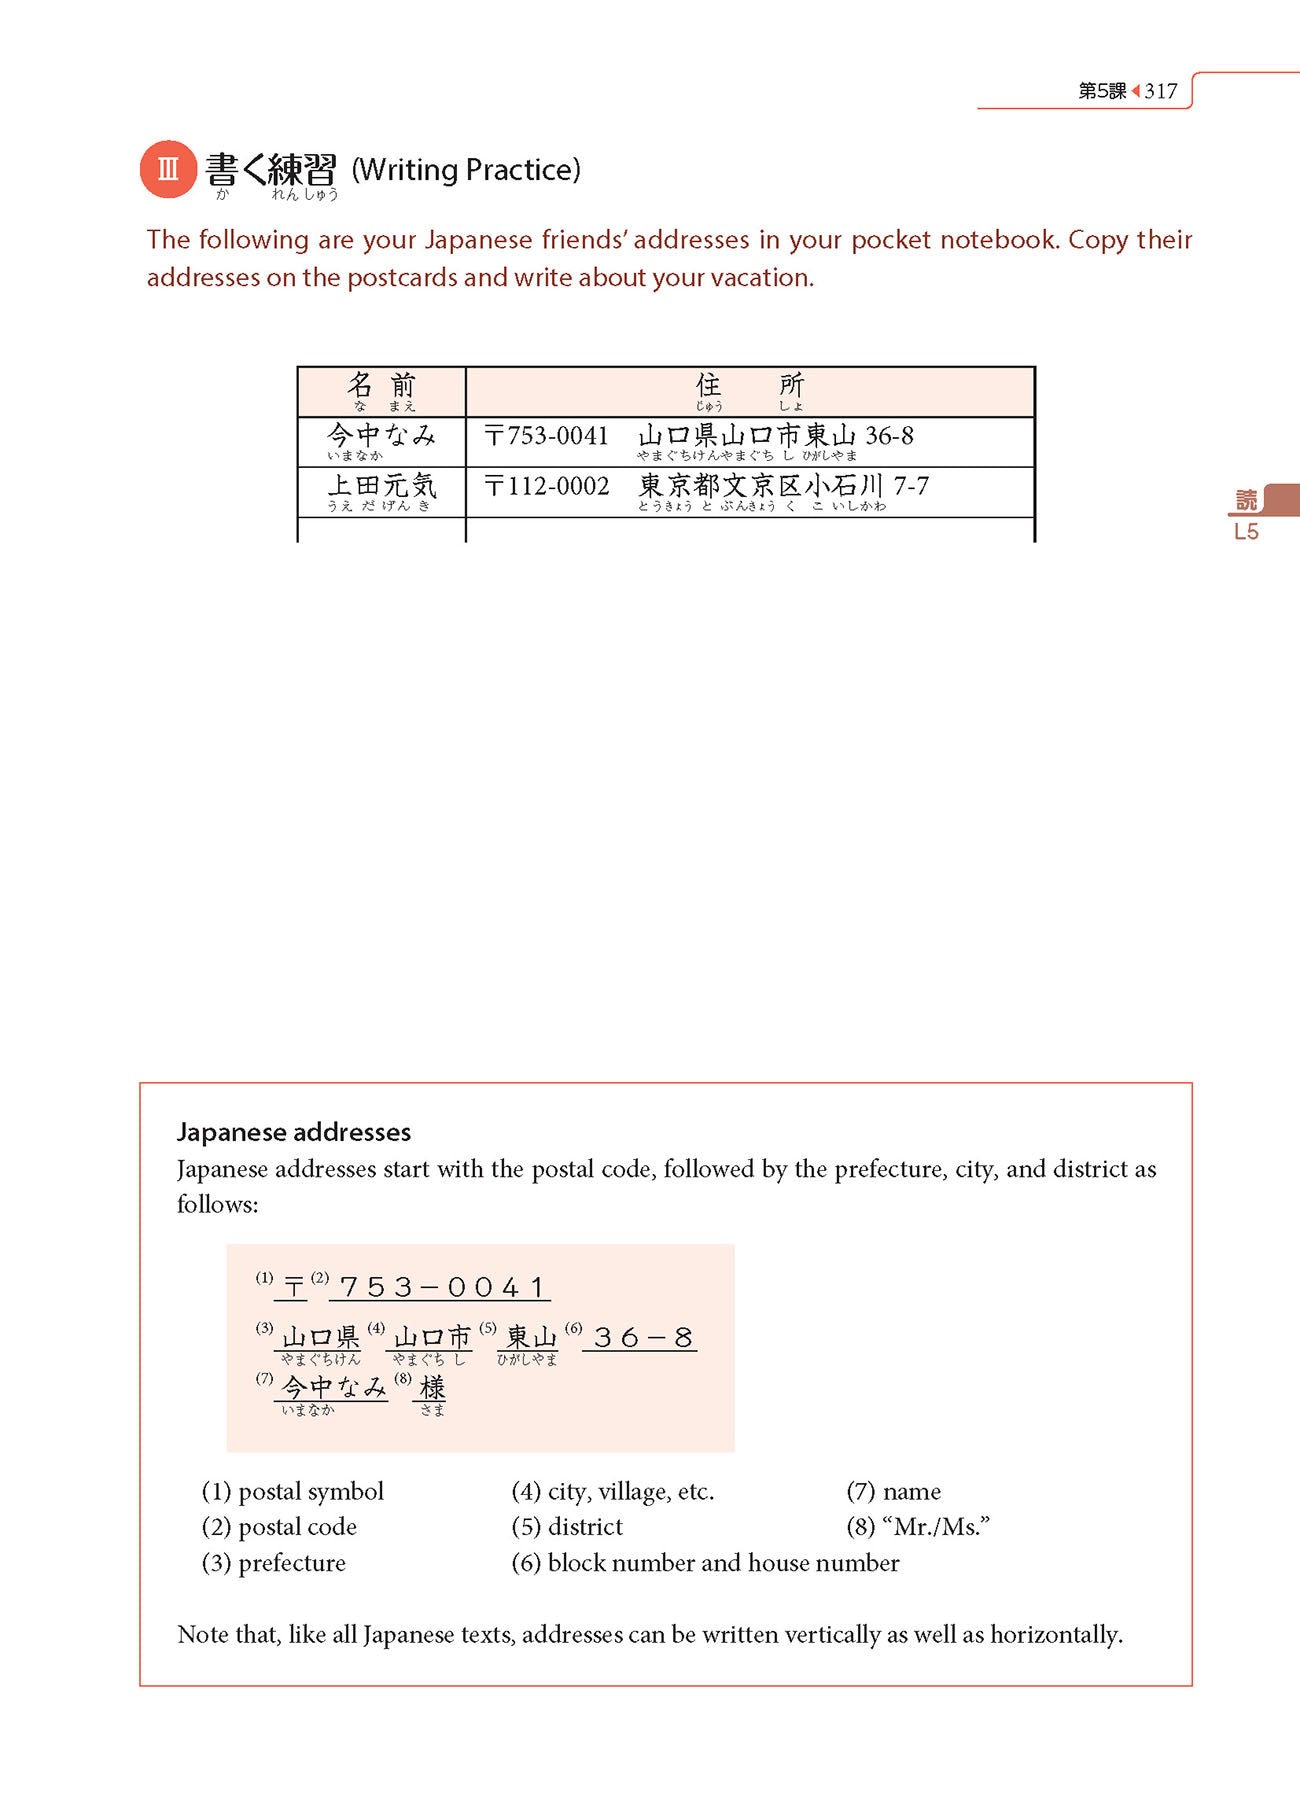 Genki Textbook 1 - Sample Page 6